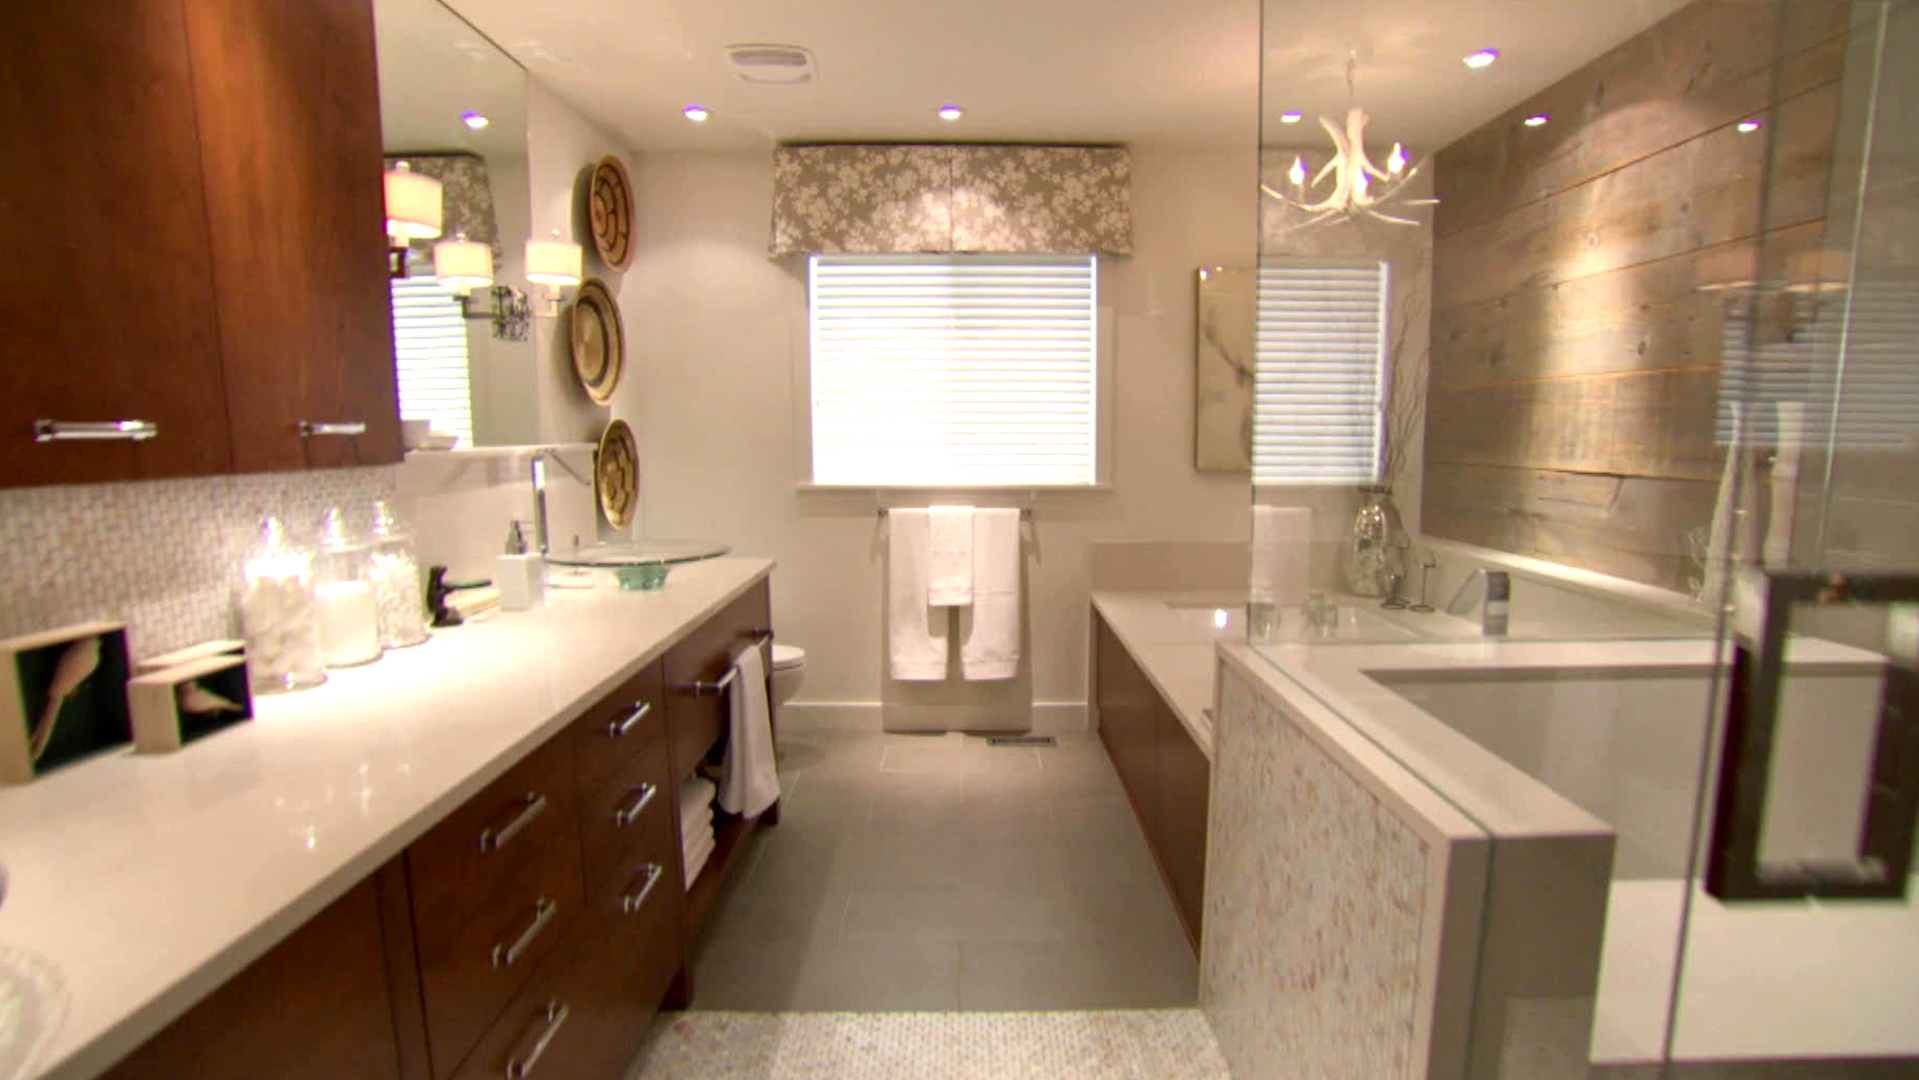 Bathroom Renovation  Ideas  For Australia  Based Homes  mimicoco